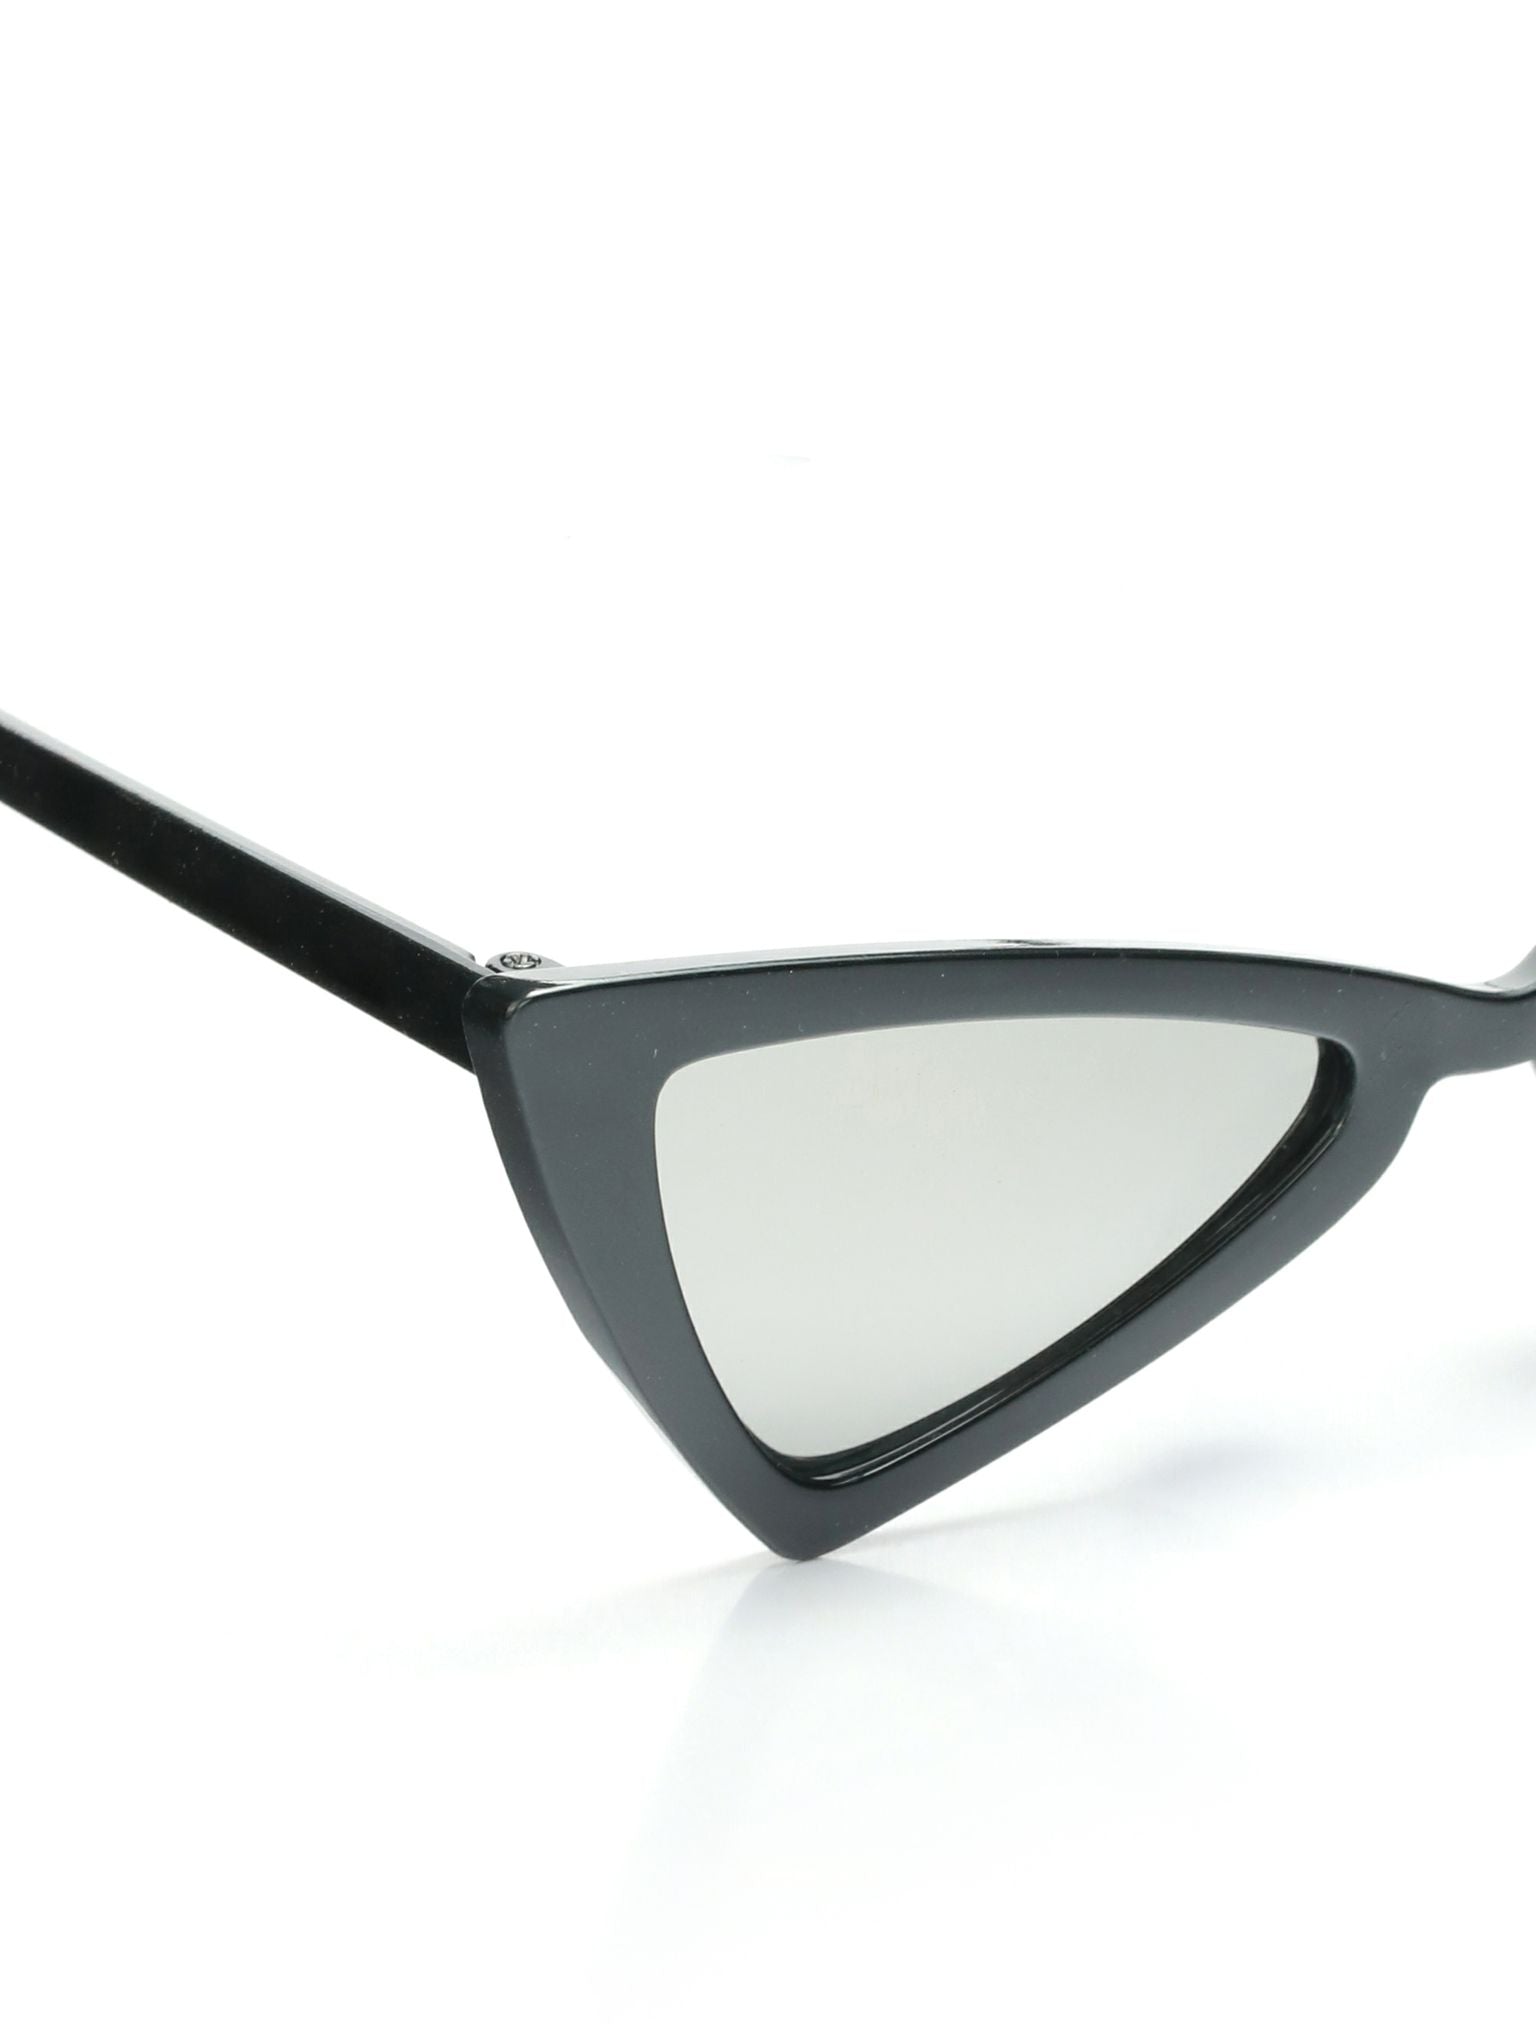 Trendy Cat Eye shaped Fashion Womens Sunglasses,Medium